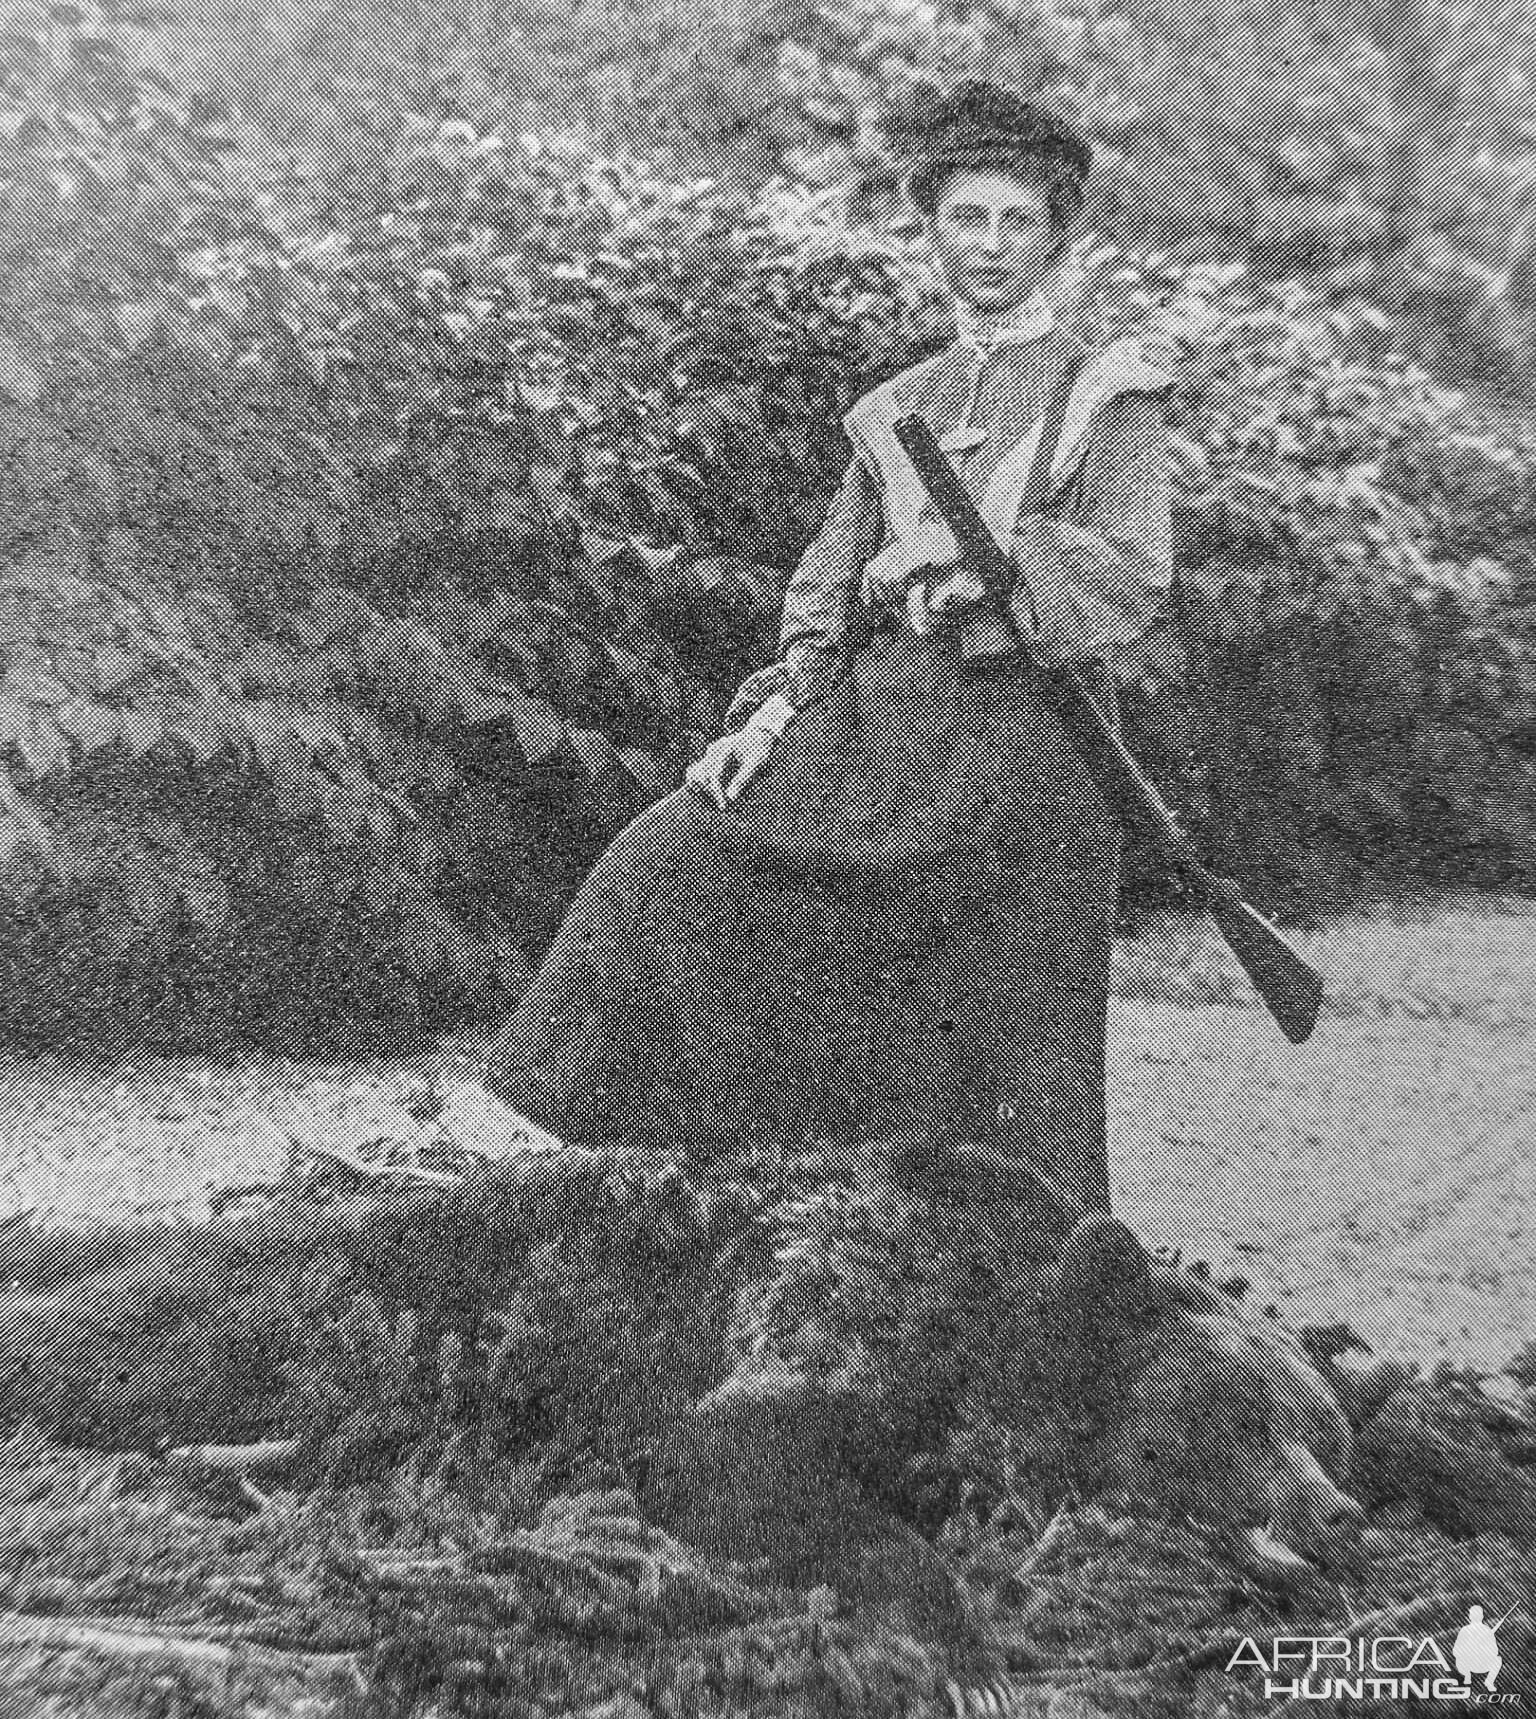 Hunt Bear in Transylvania now Romania 1880s